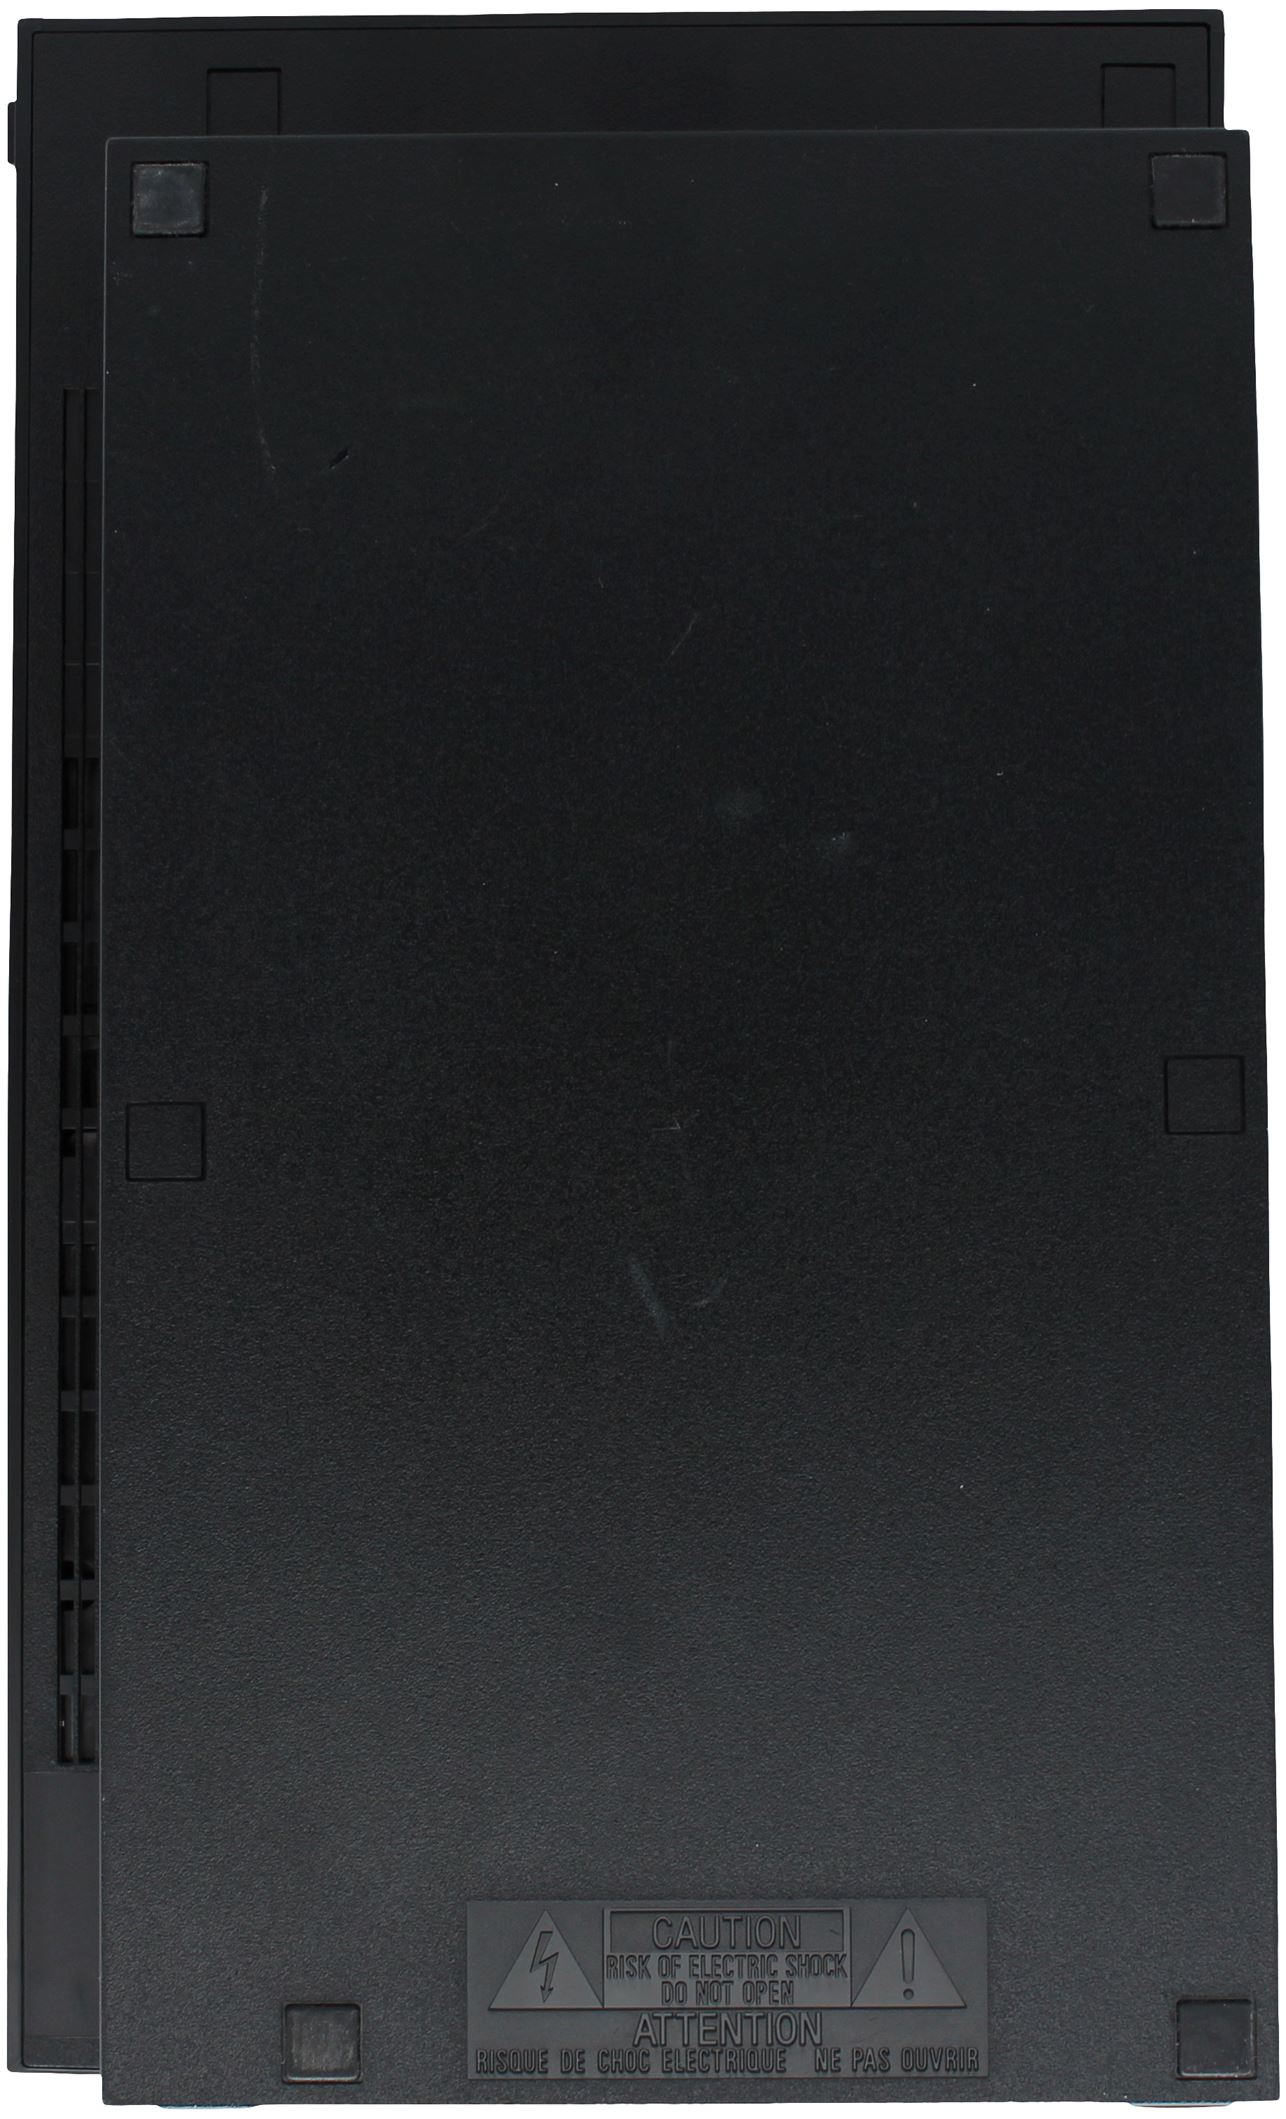 Sony PlayStation 2 (PS2) Single-Player Bundle